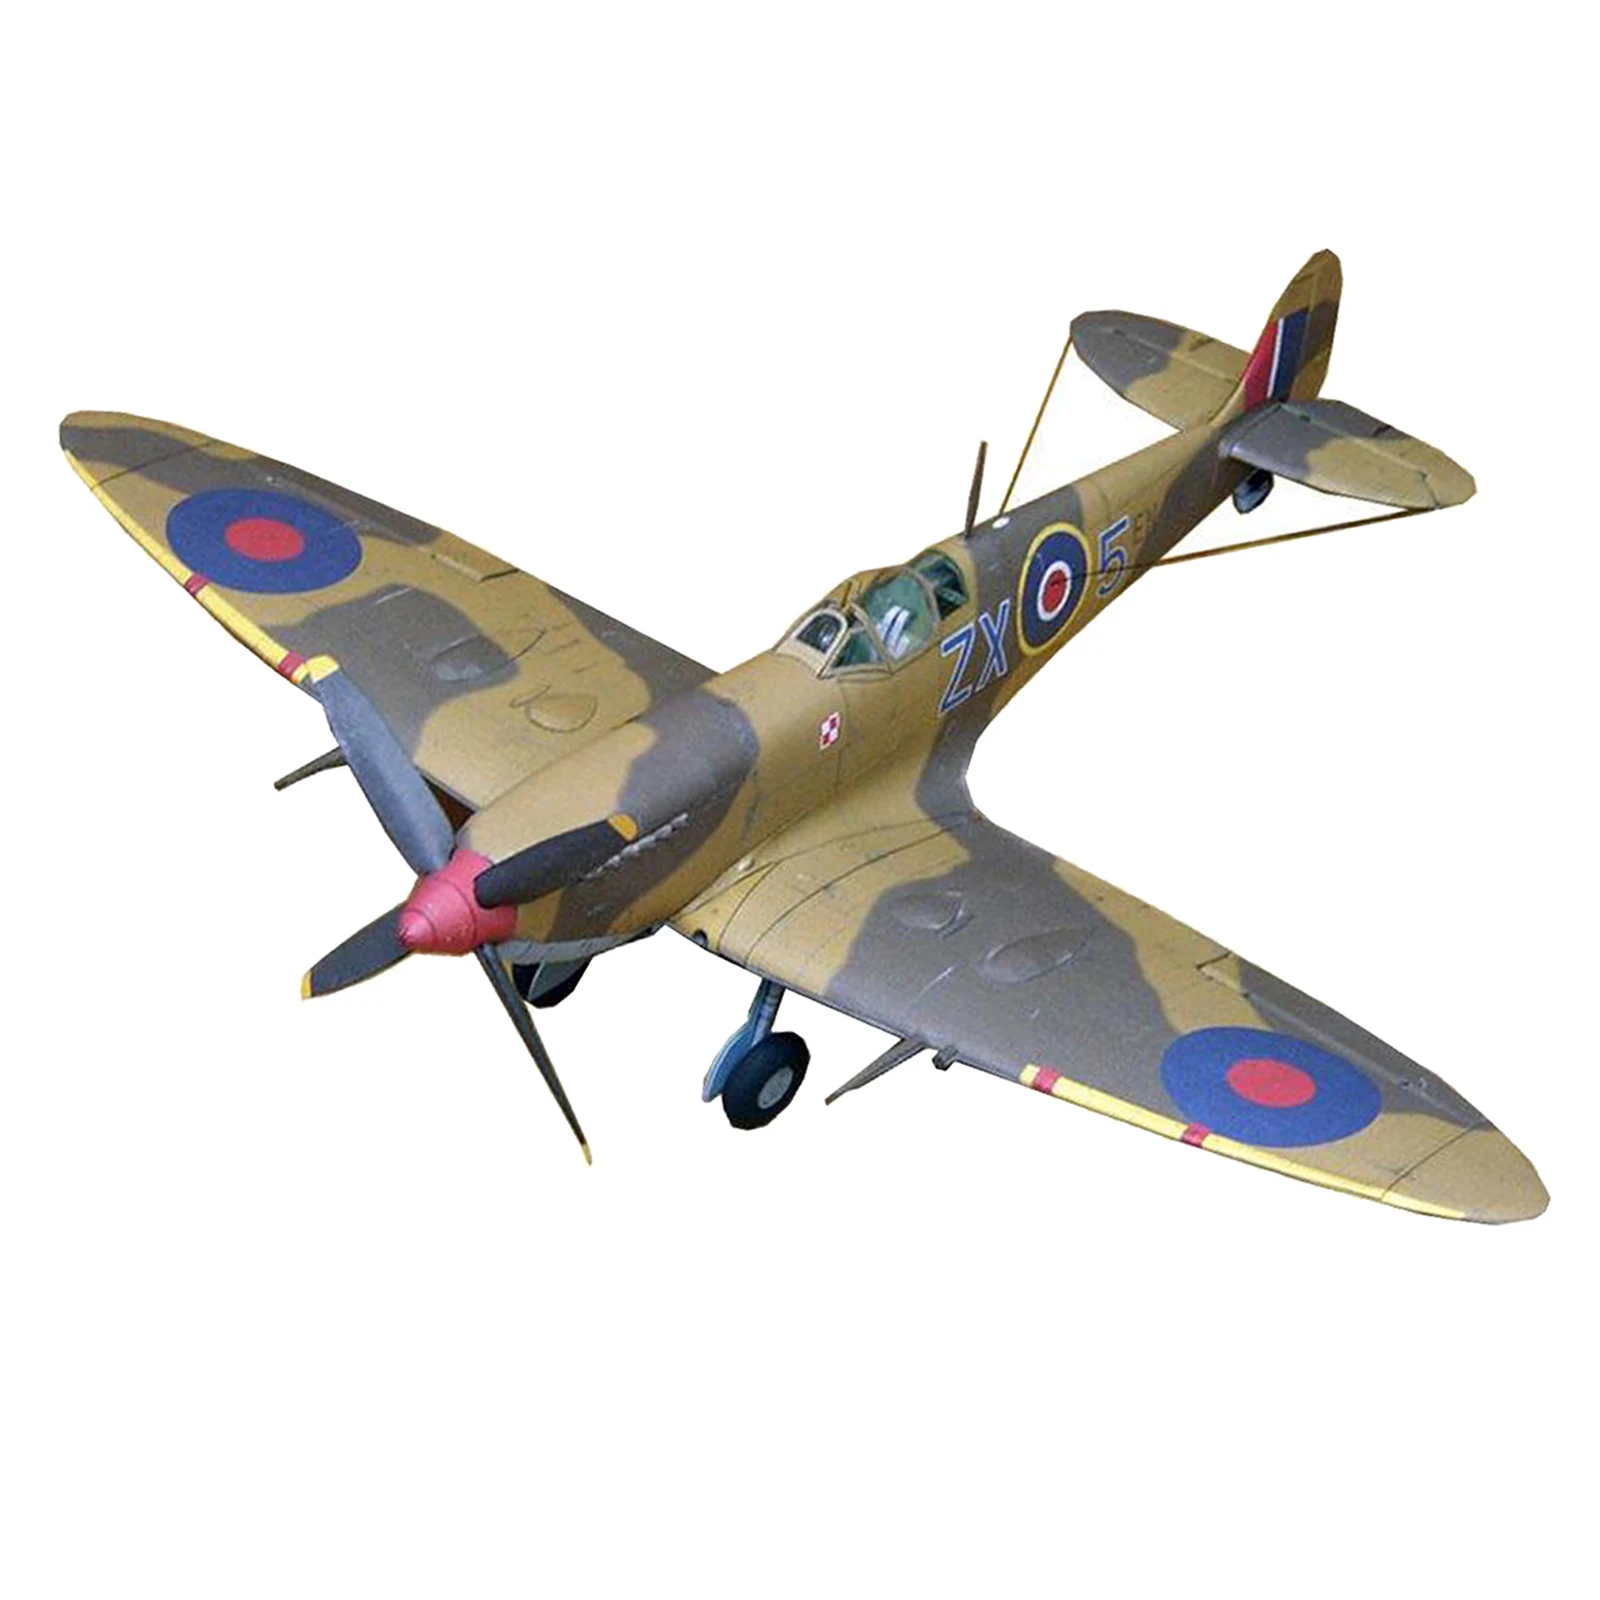 1:33 Papier Spitfire Fighter Modellbausatz Flugzeug Home Desktop Decor